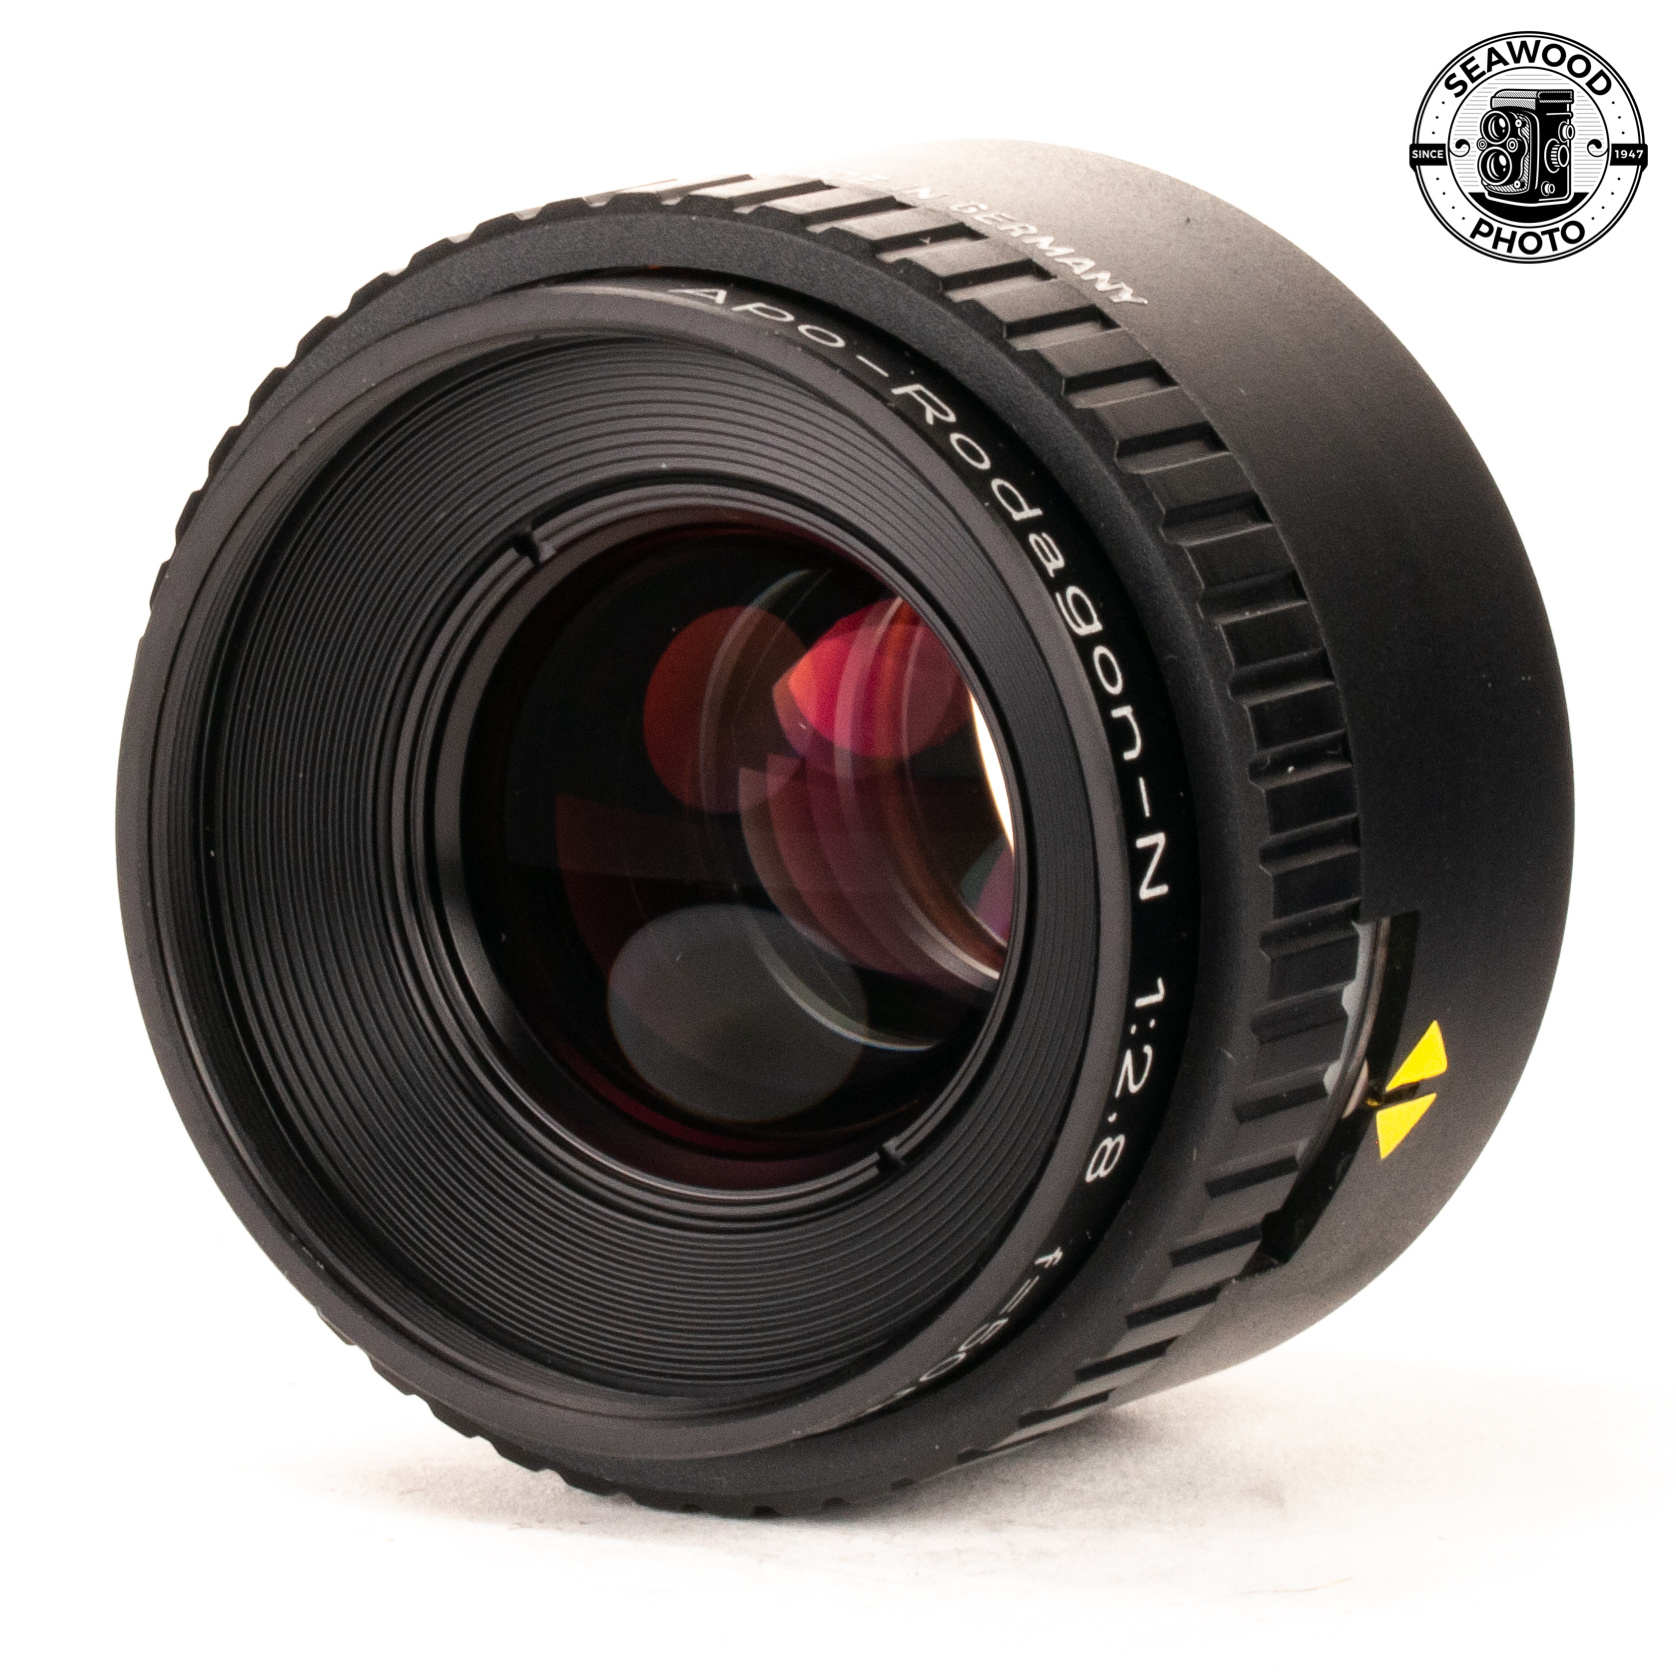 Rodenstock 50mm f/2.8 Apo-Rodagon-N Enlarging Lens EXCELLENT